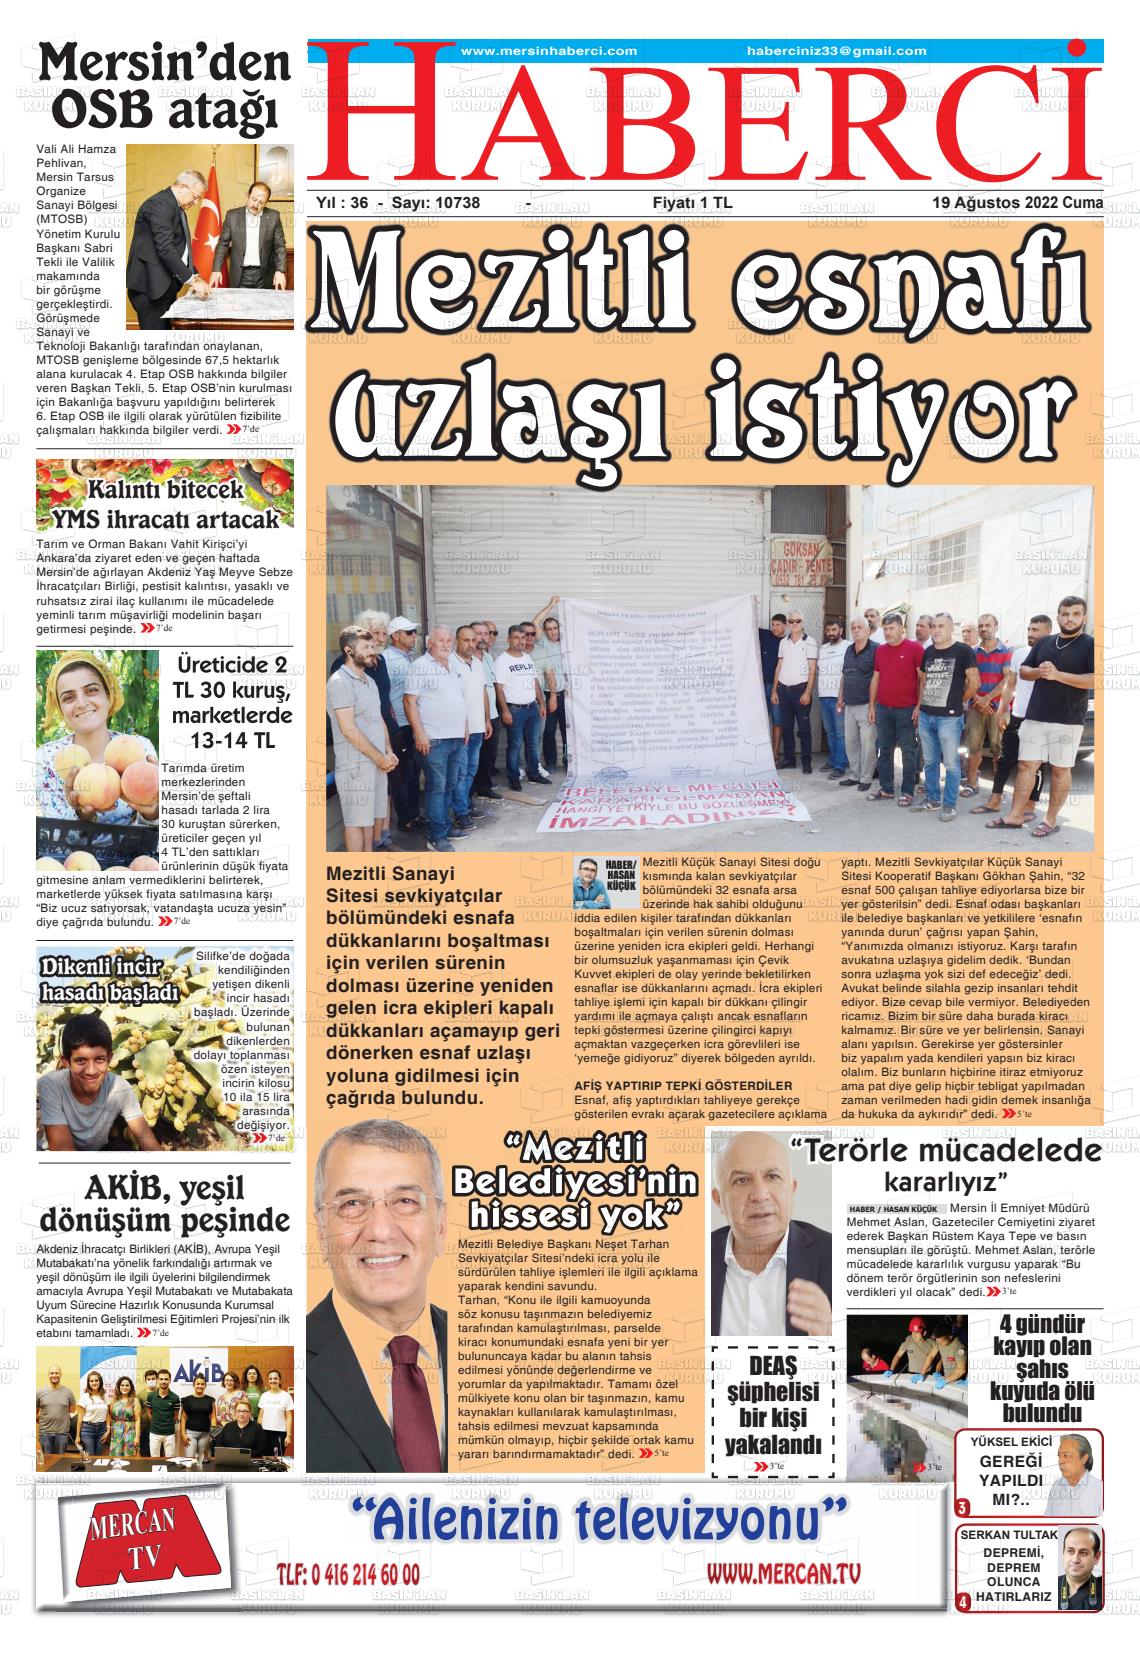 19 Ağustos 2022 Mersin Haberci Gazete Manşeti